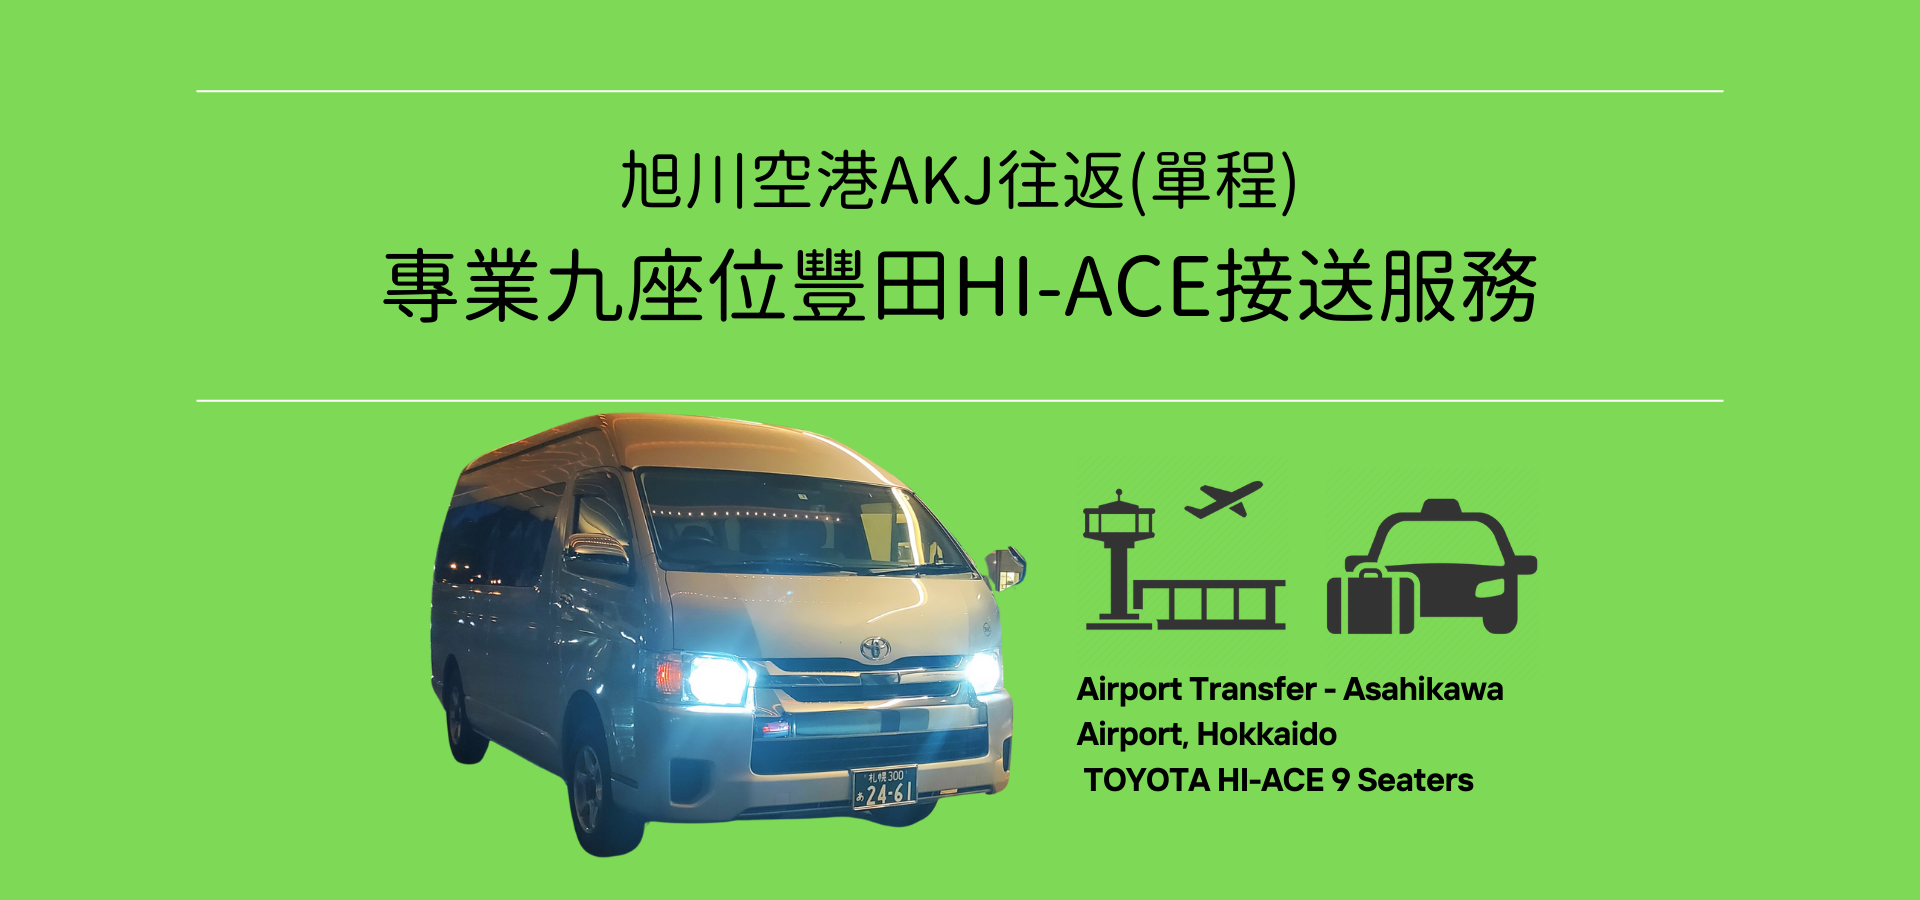 hokkaido travel coach transfers